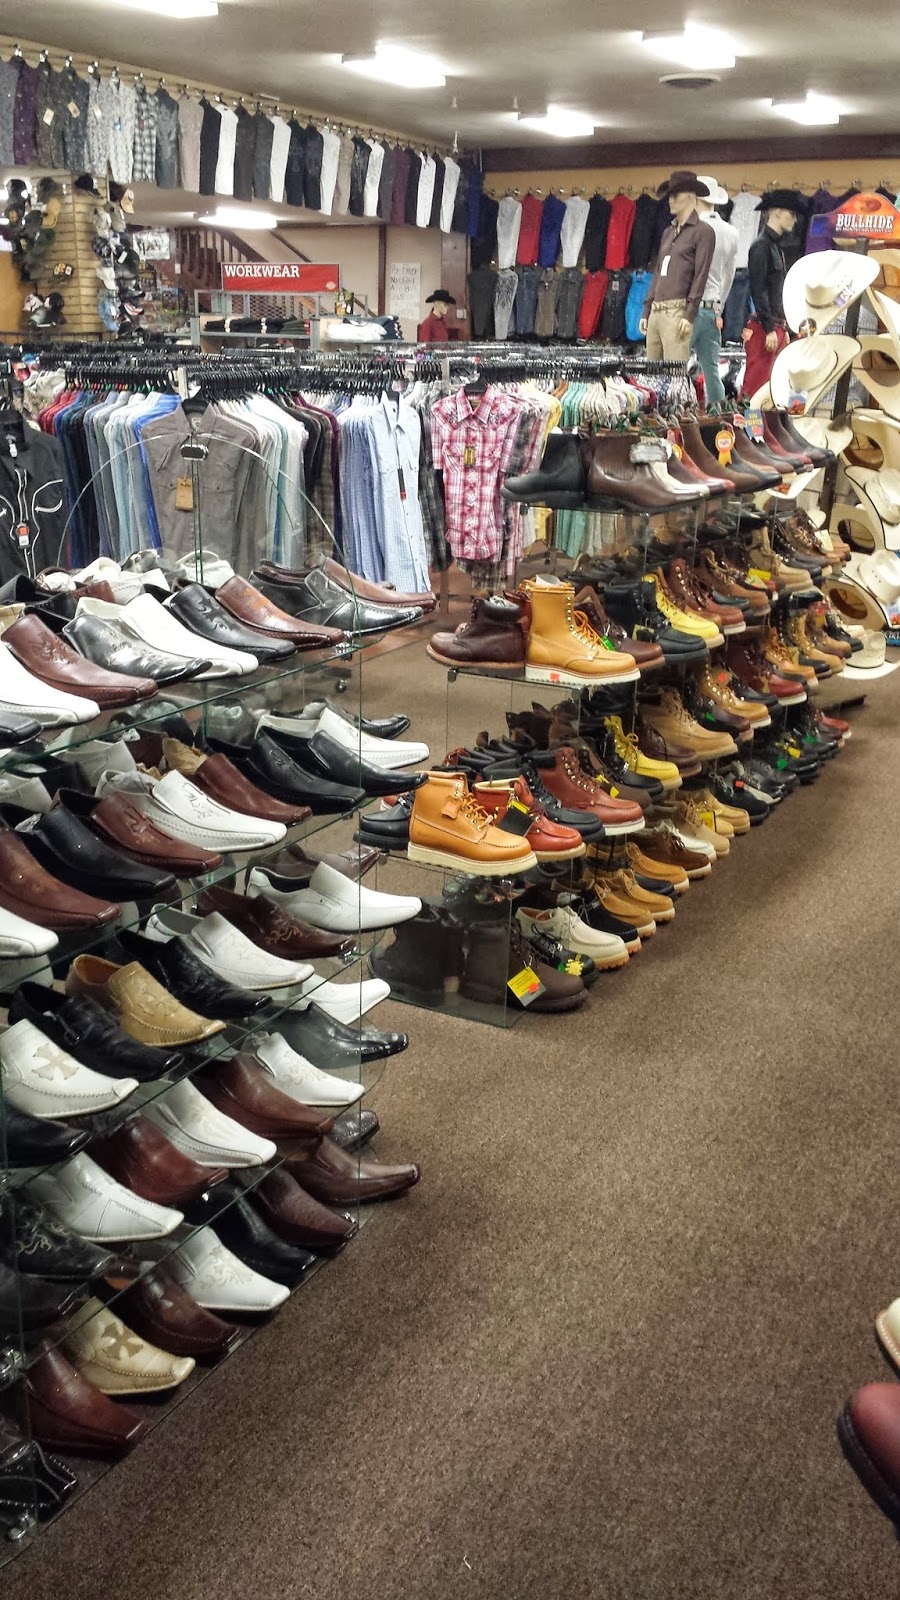 El Vaquero - The Cowboy Store - shoe store  | Photo 6 of 10 | Address: 506 E First St, Santa Ana, CA 92701, USA | Phone: (714) 547-9609